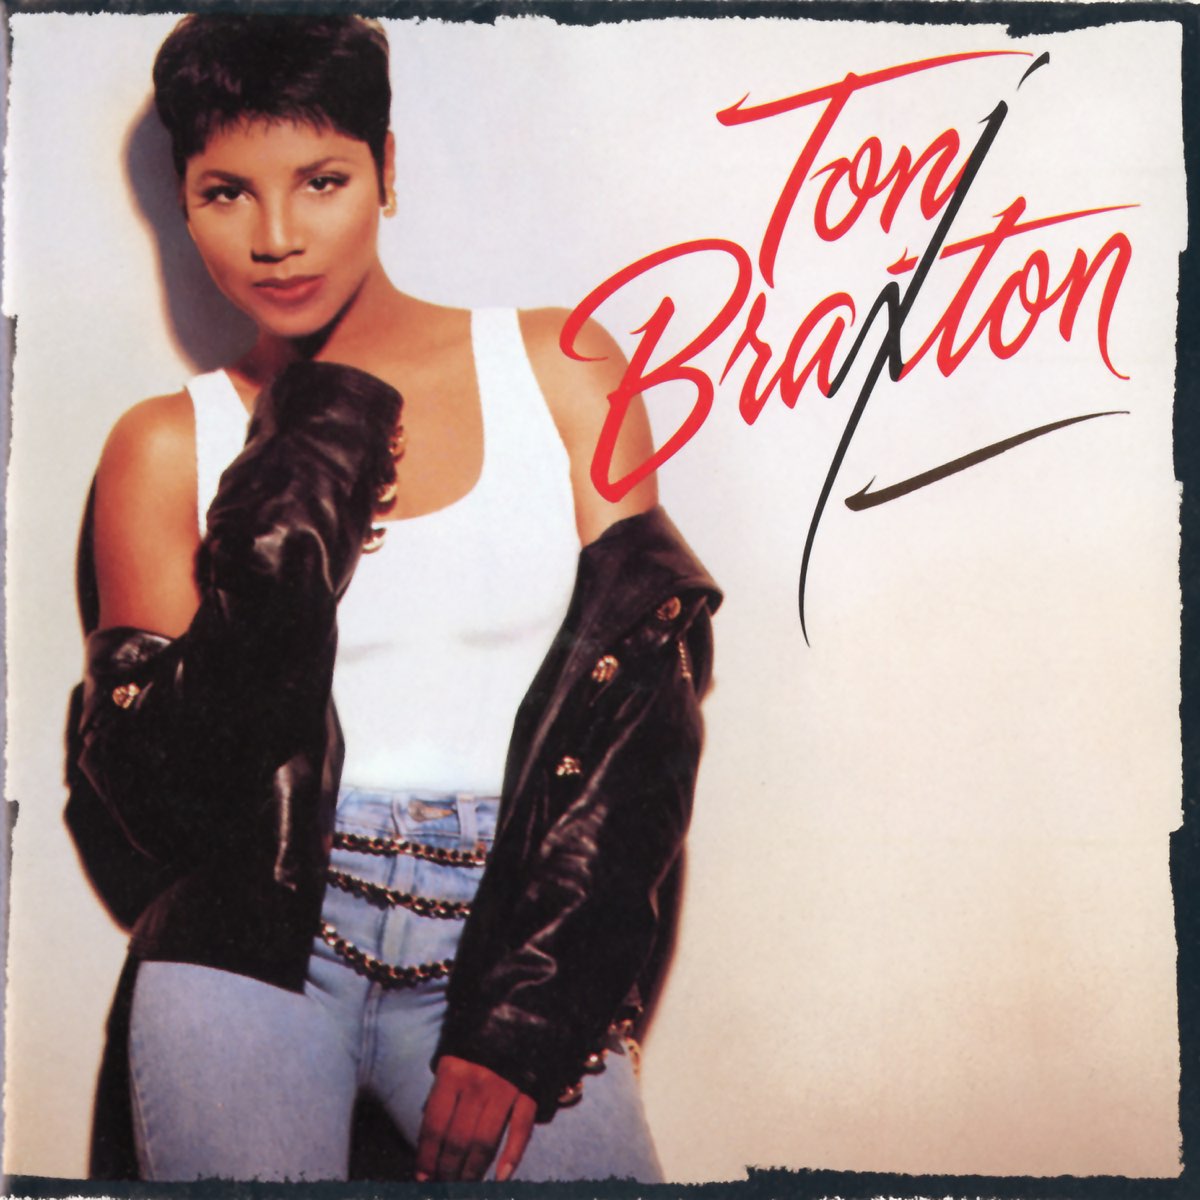 Toni Braxton by Toni Braxton on Apple Music